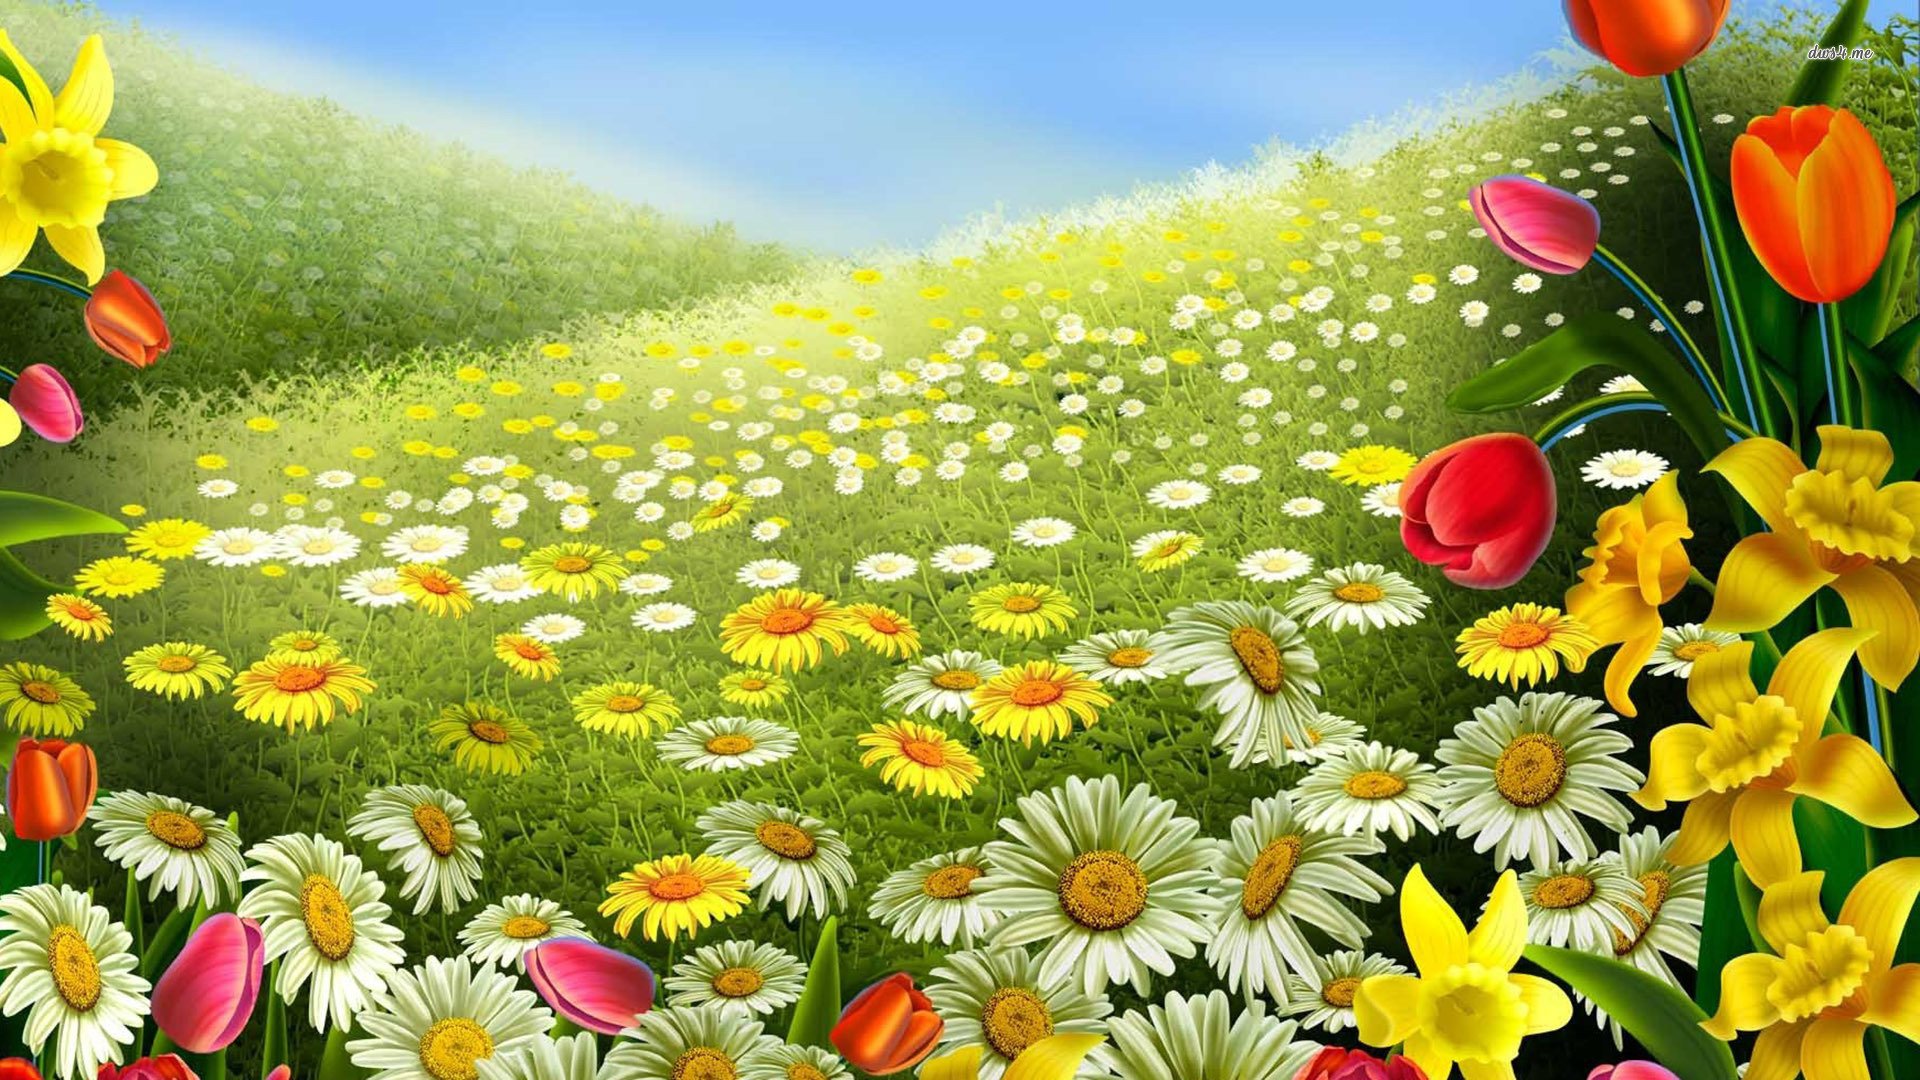 flower live wallpaper hd,natural landscape,meadow,flower,natural environment,wildflower